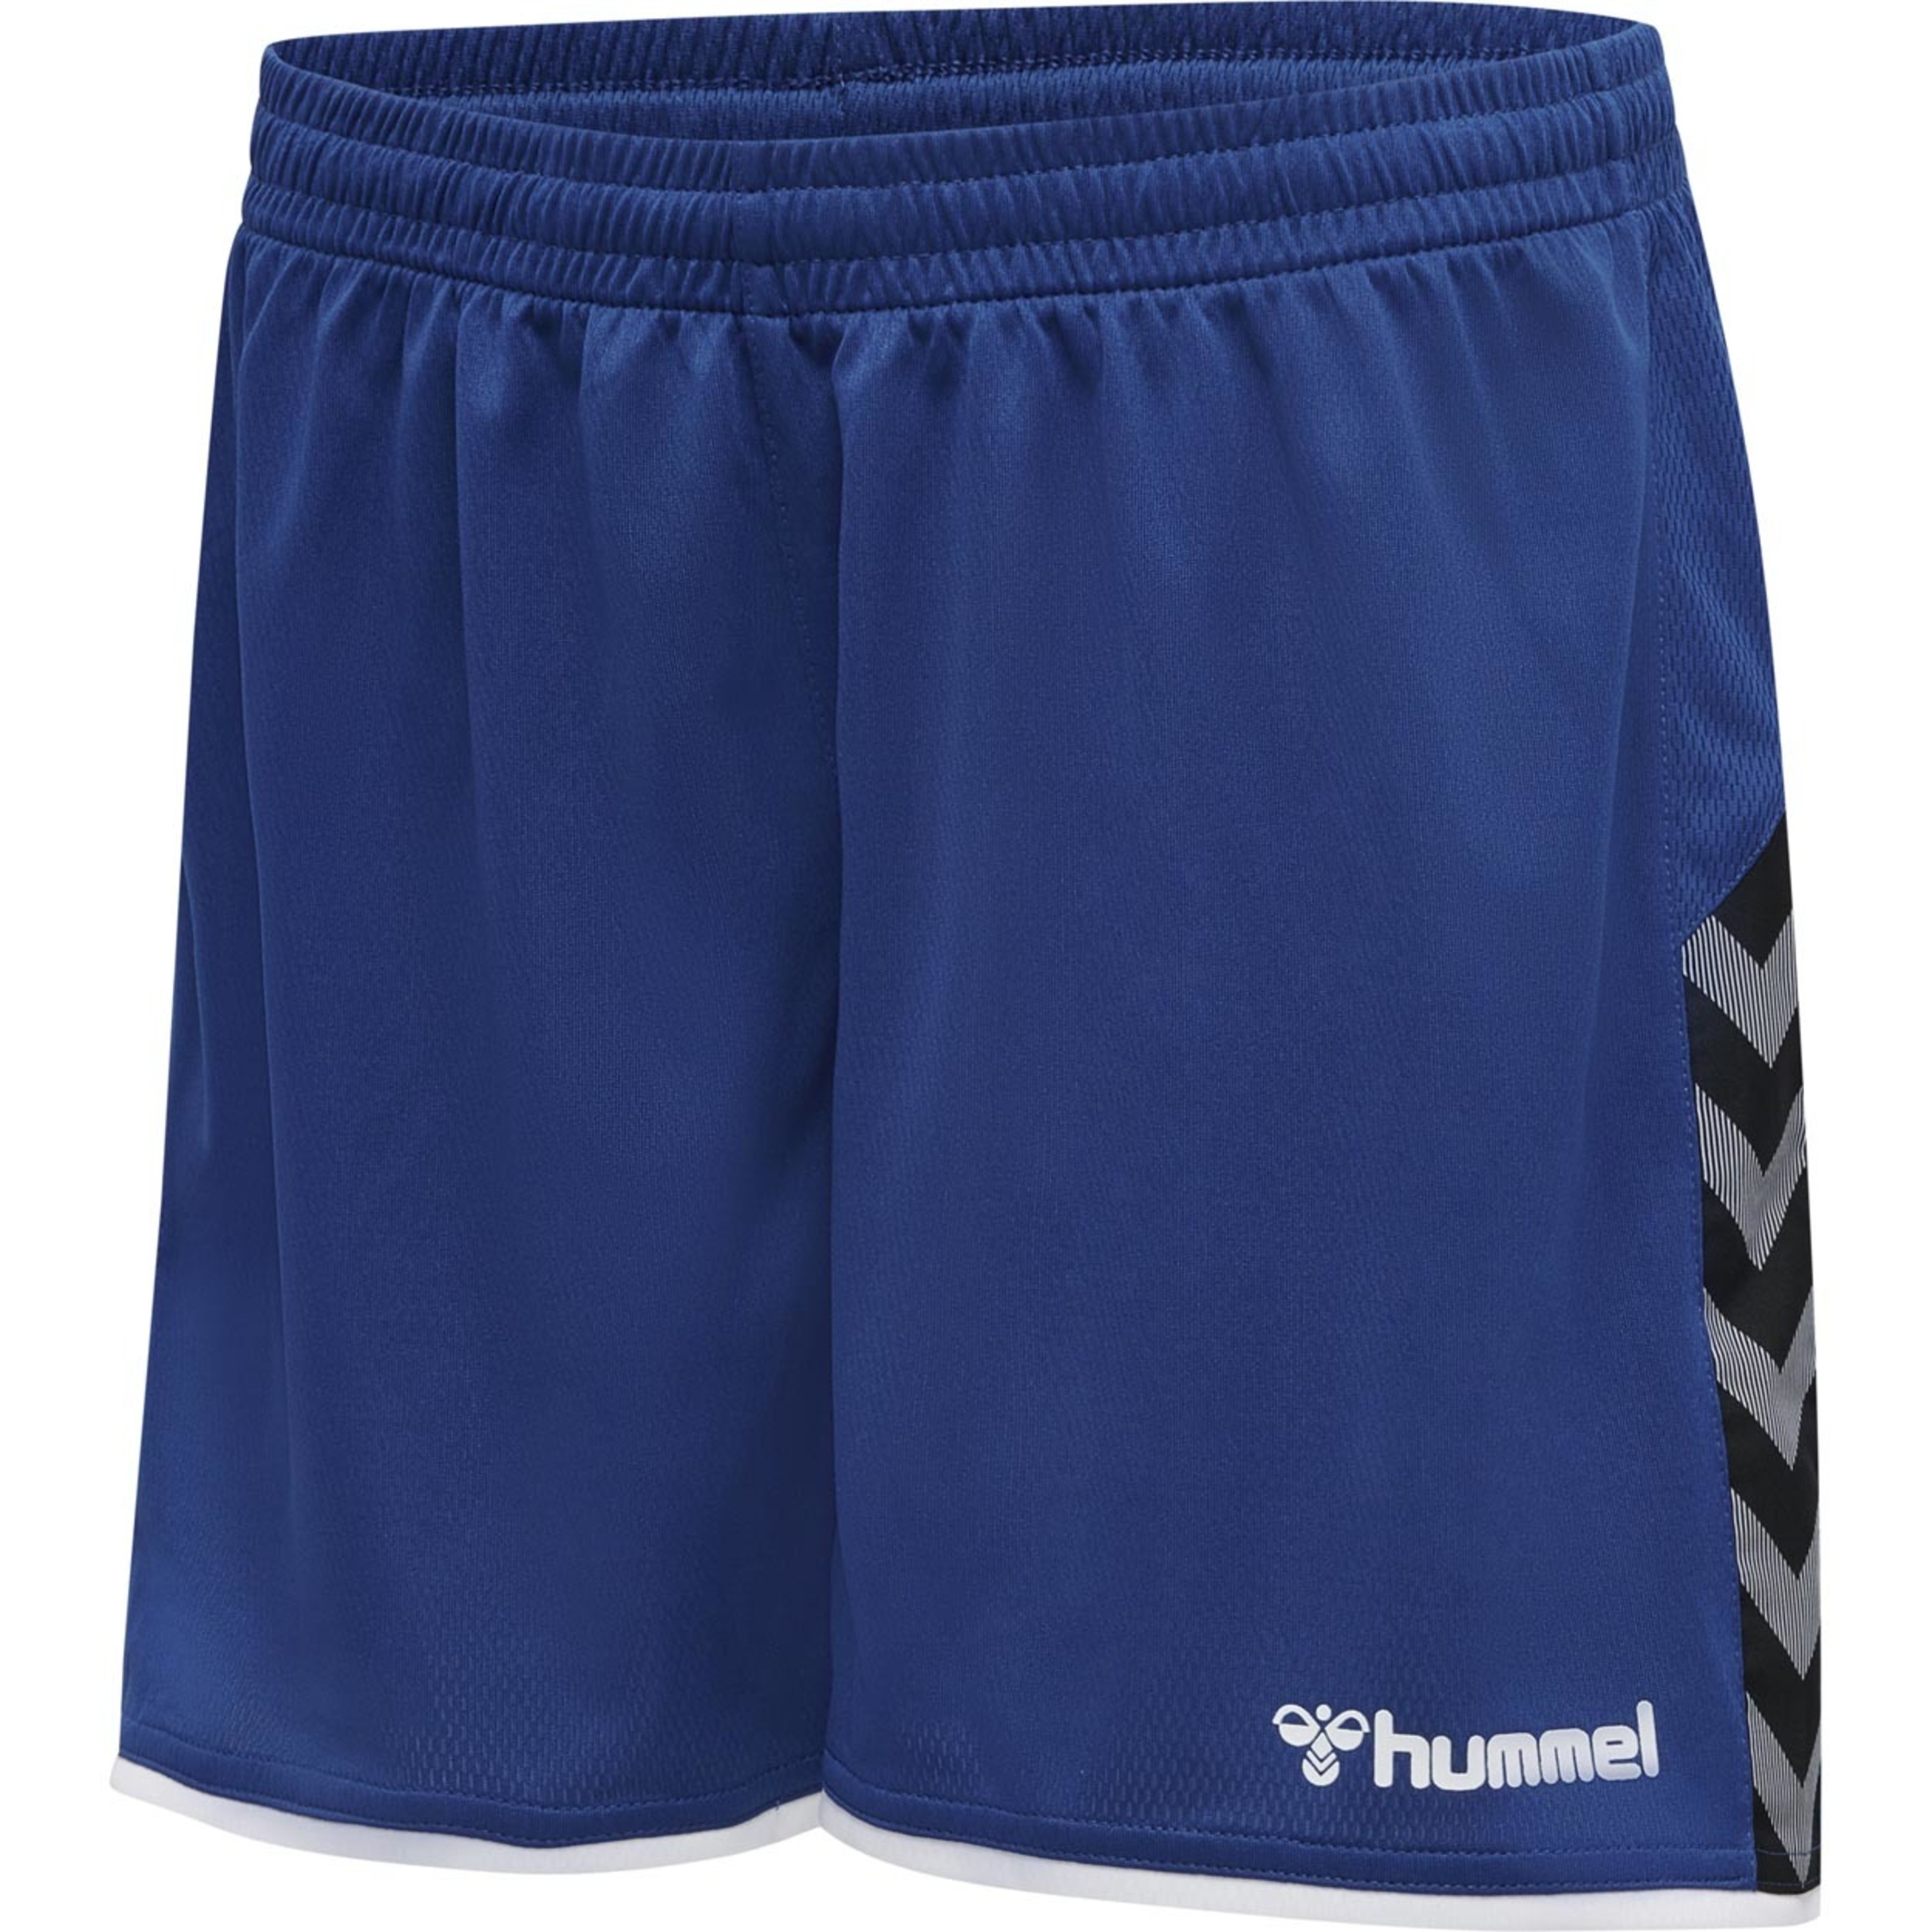 Pantalones Cortos Hummel Authentic Poly - Azul Oscuro  MKP